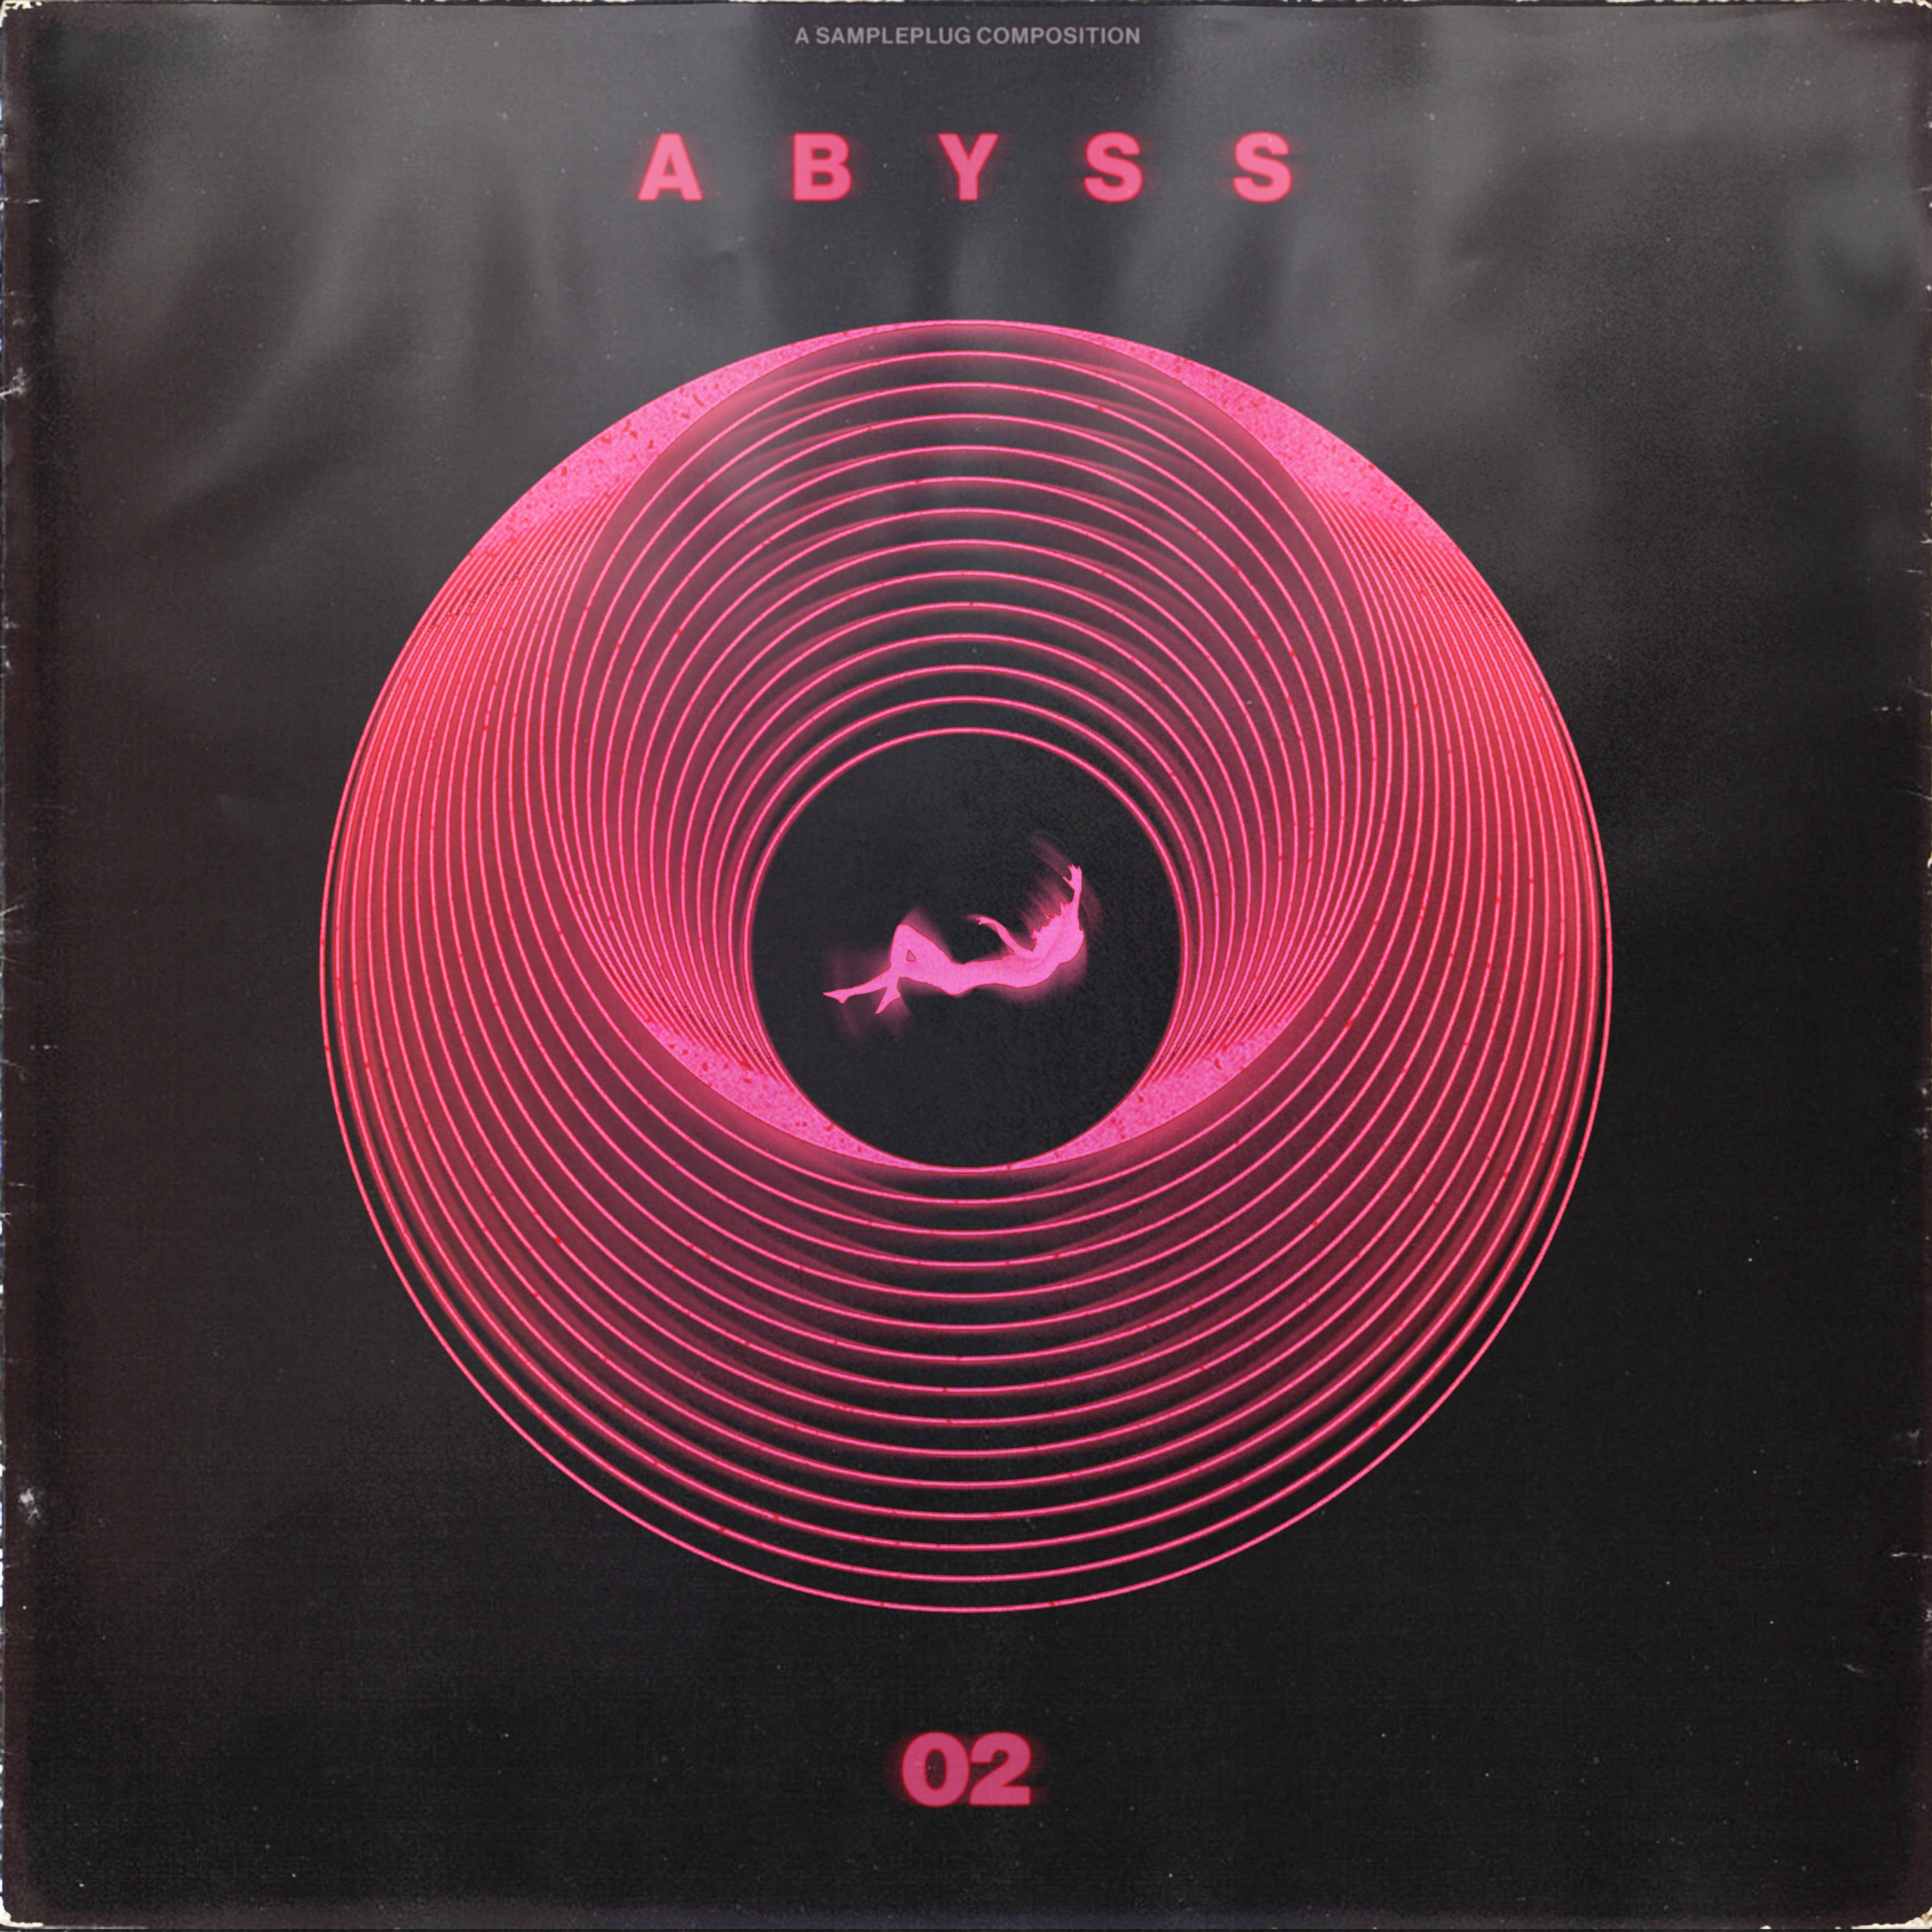 Abyss Vol. 2 - Sample Plug